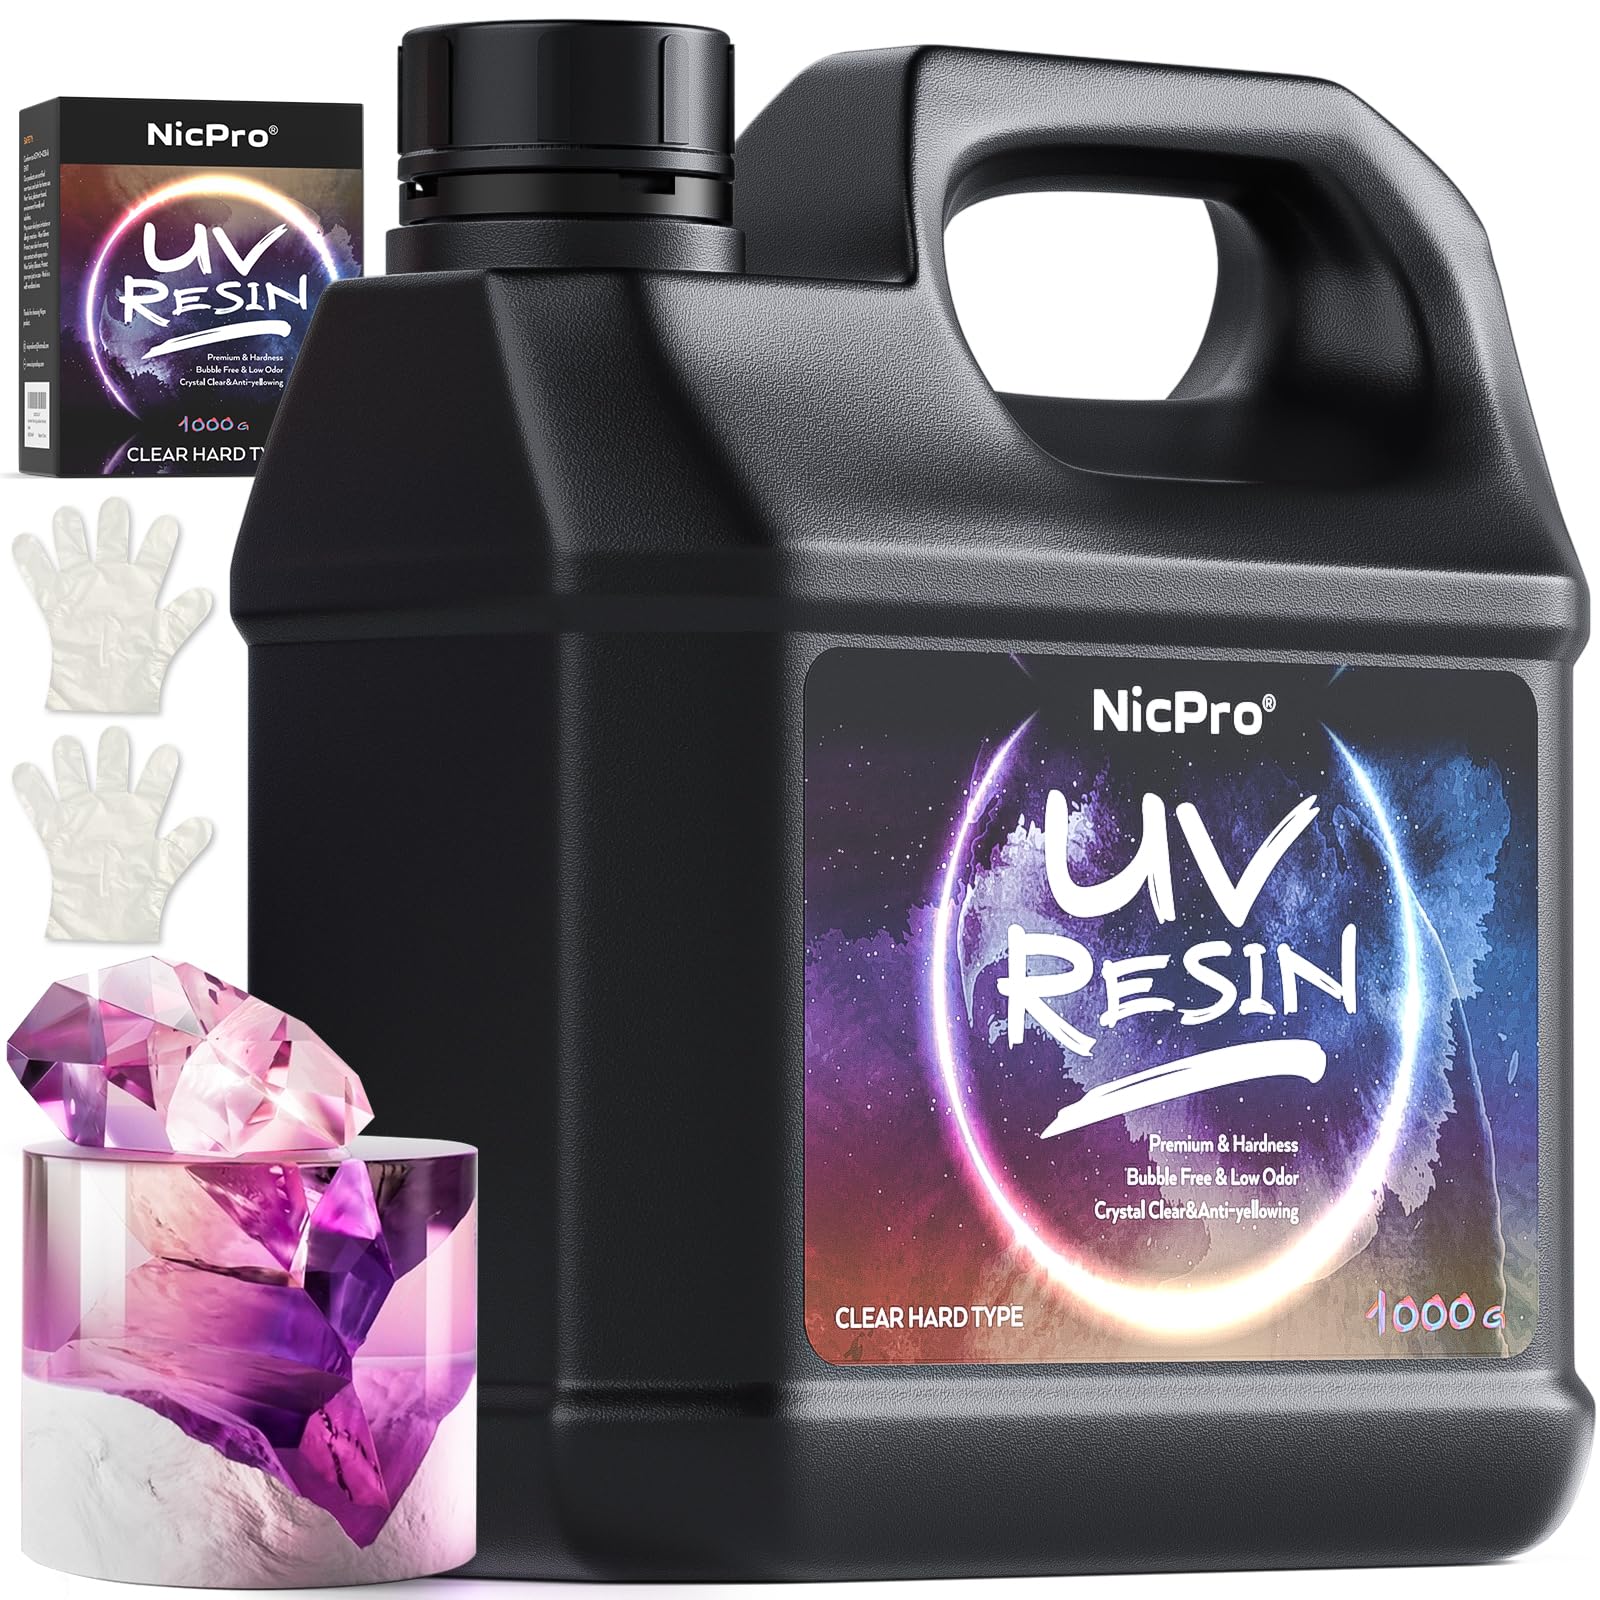 Nicpro UV Resin 1000g, Upgrade Crystal Clear Ultraviolet Epoxy Resin G